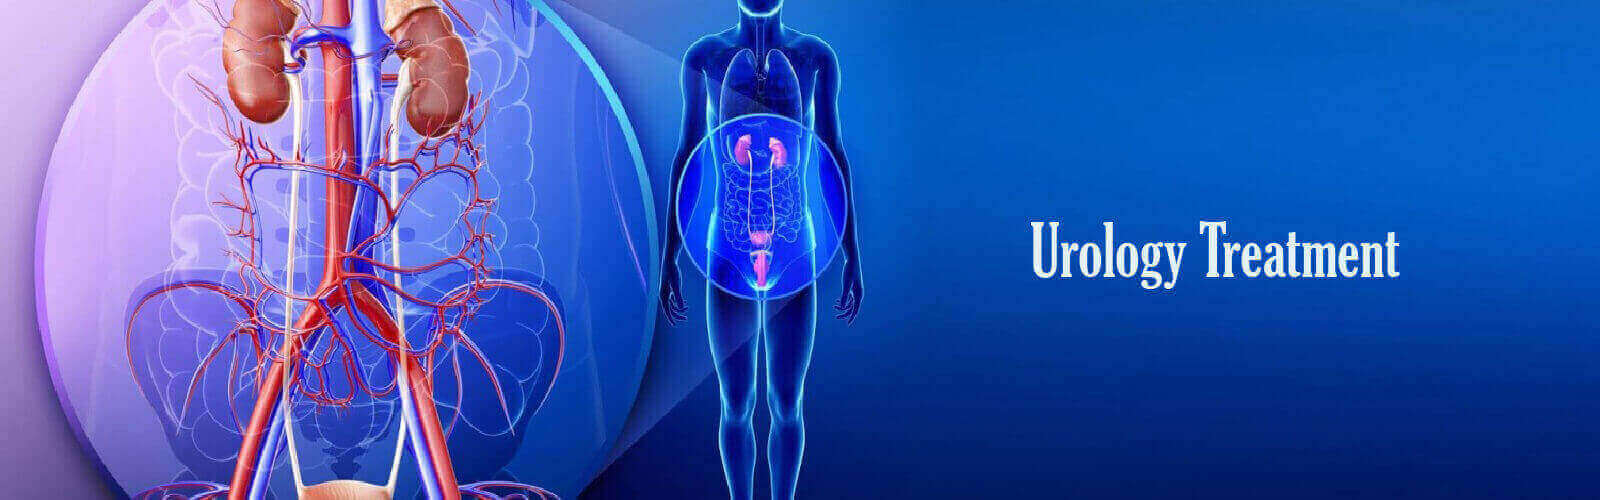 Urology Treatment in Us